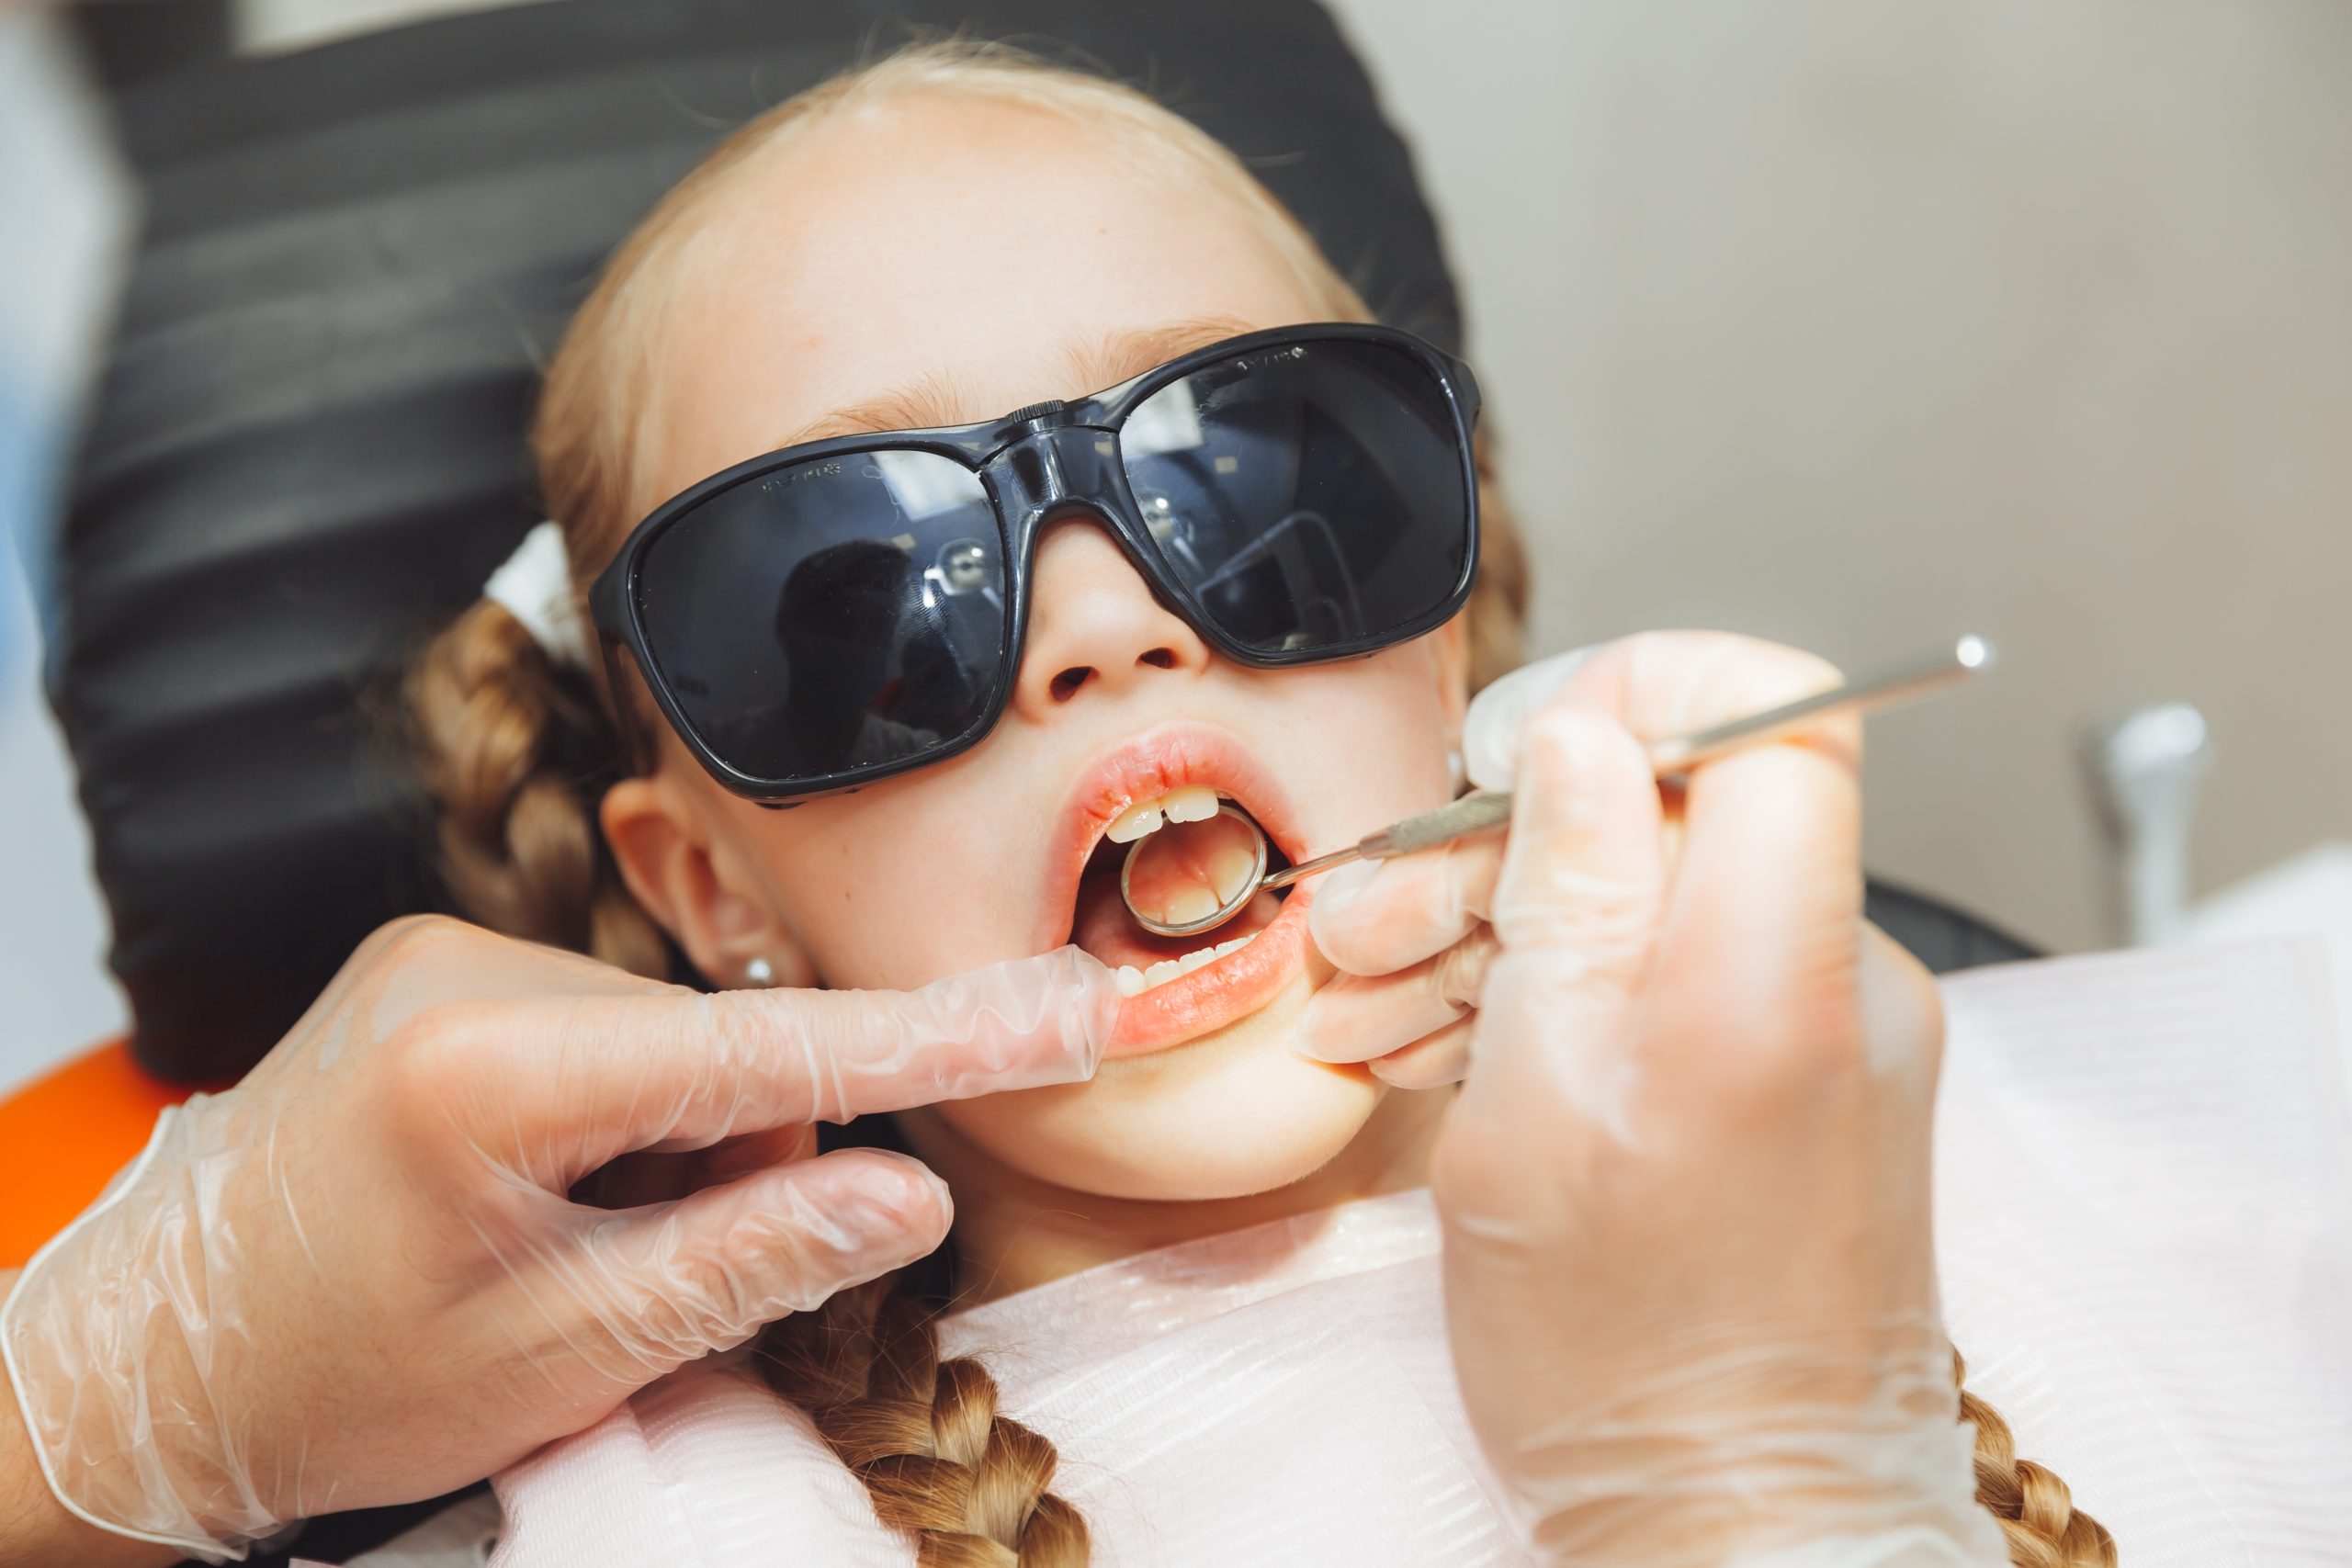 Teeth bonding in a North York dentistry